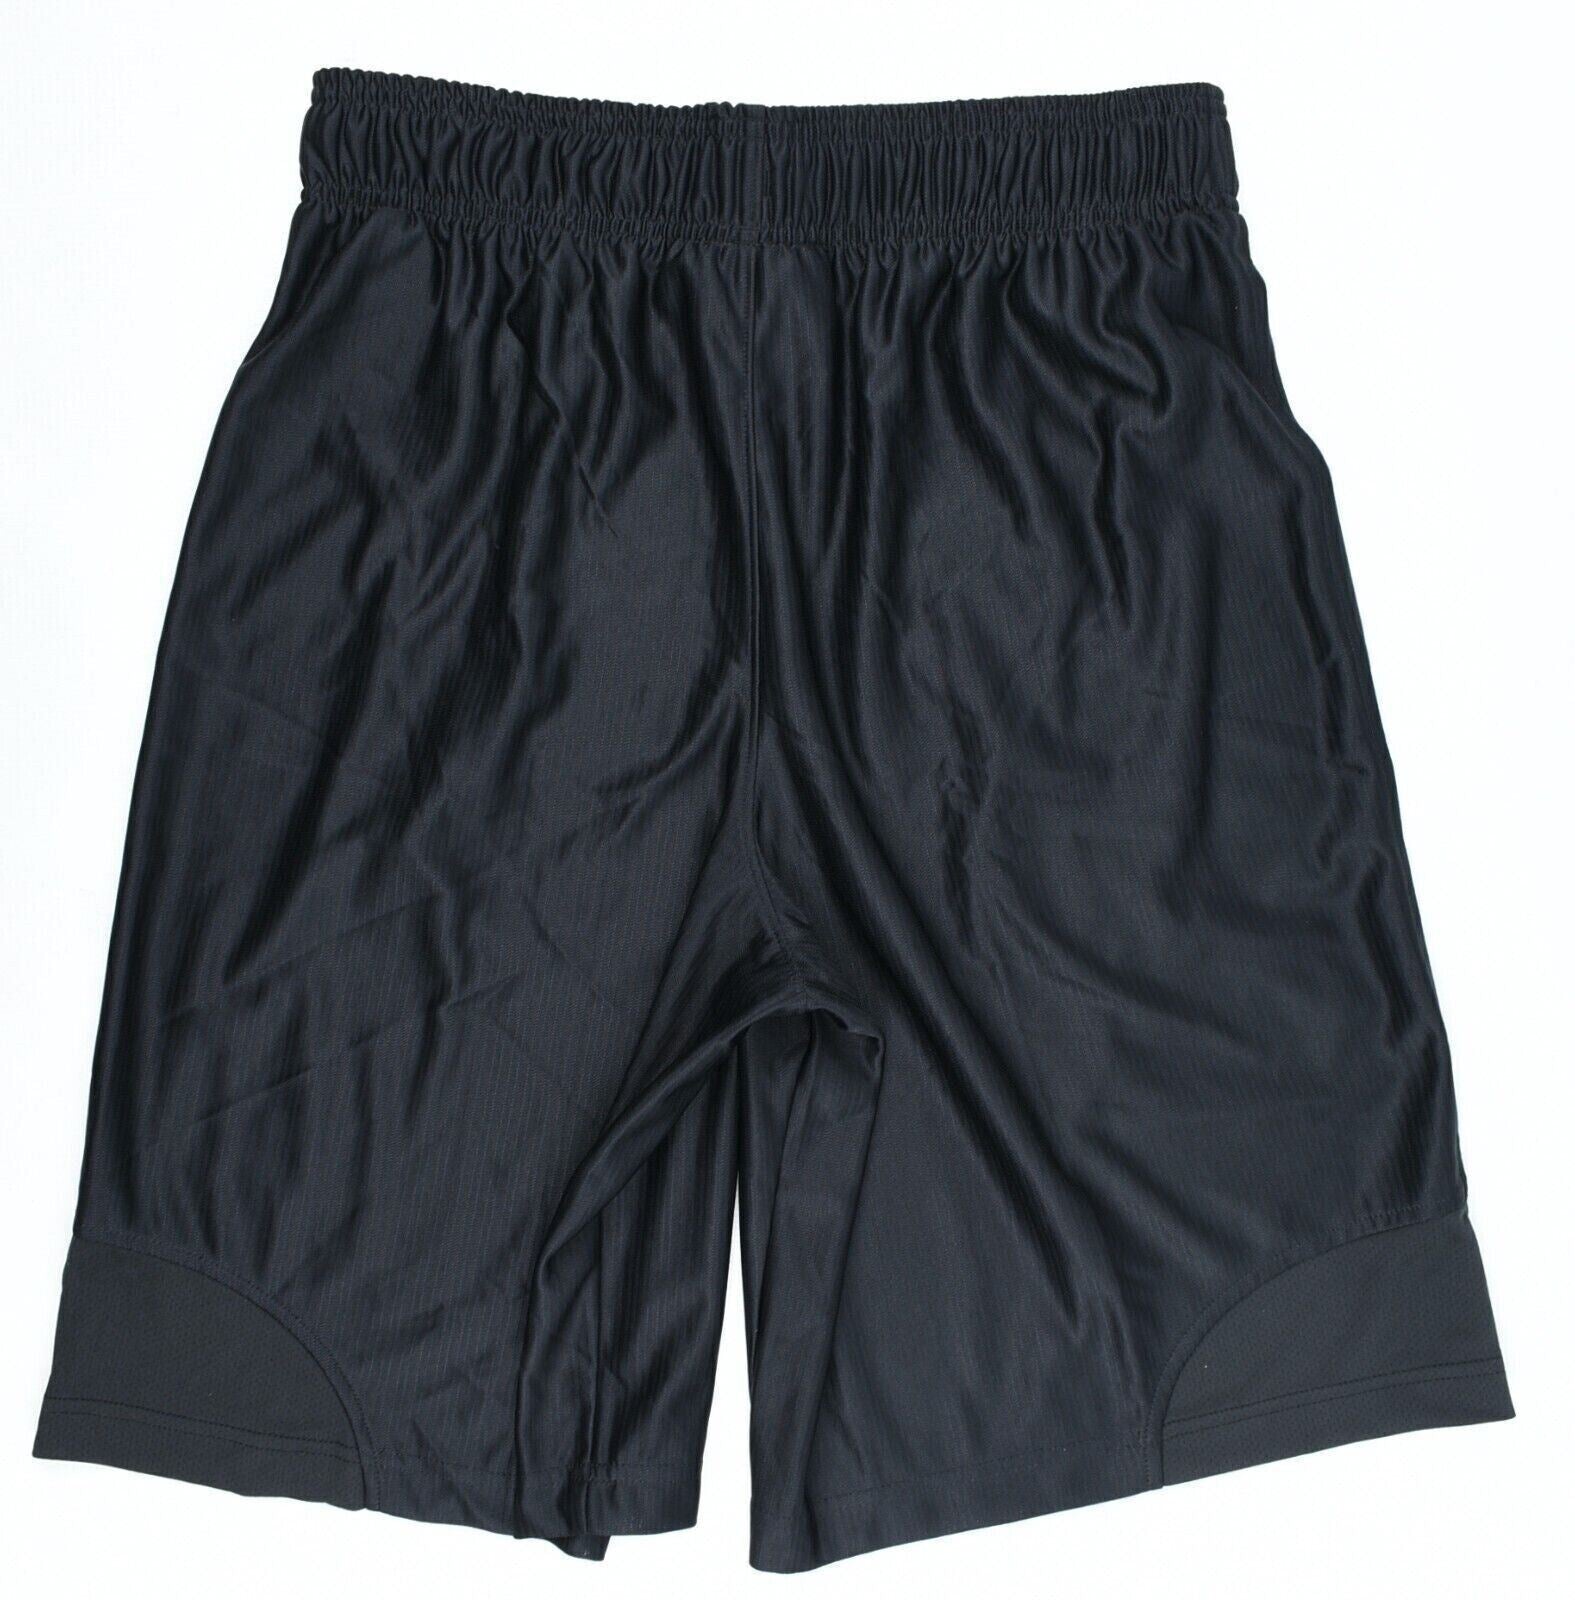 UNDER ARMOUR Men's Perimeter Shorts, Loose Fit, Black/White Logo, size S